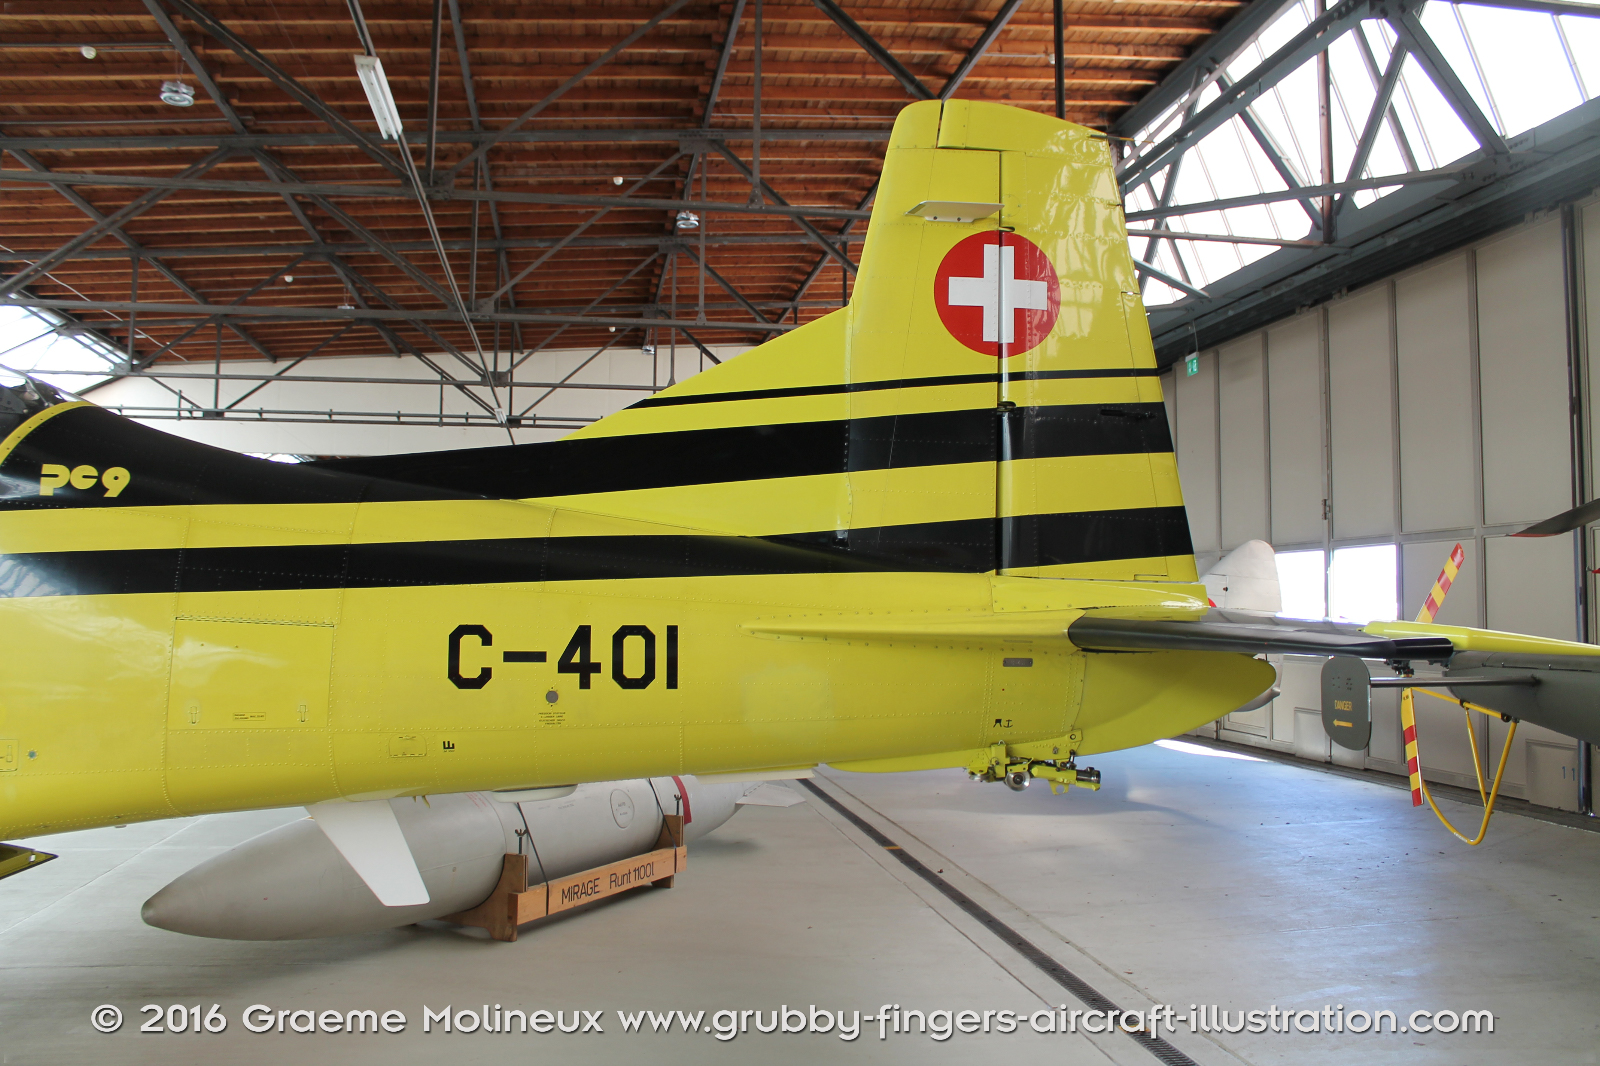 PILATUS_PC-9_C-401_Swiss_Air_Force_Museum_2015_09_GrubbyFingers